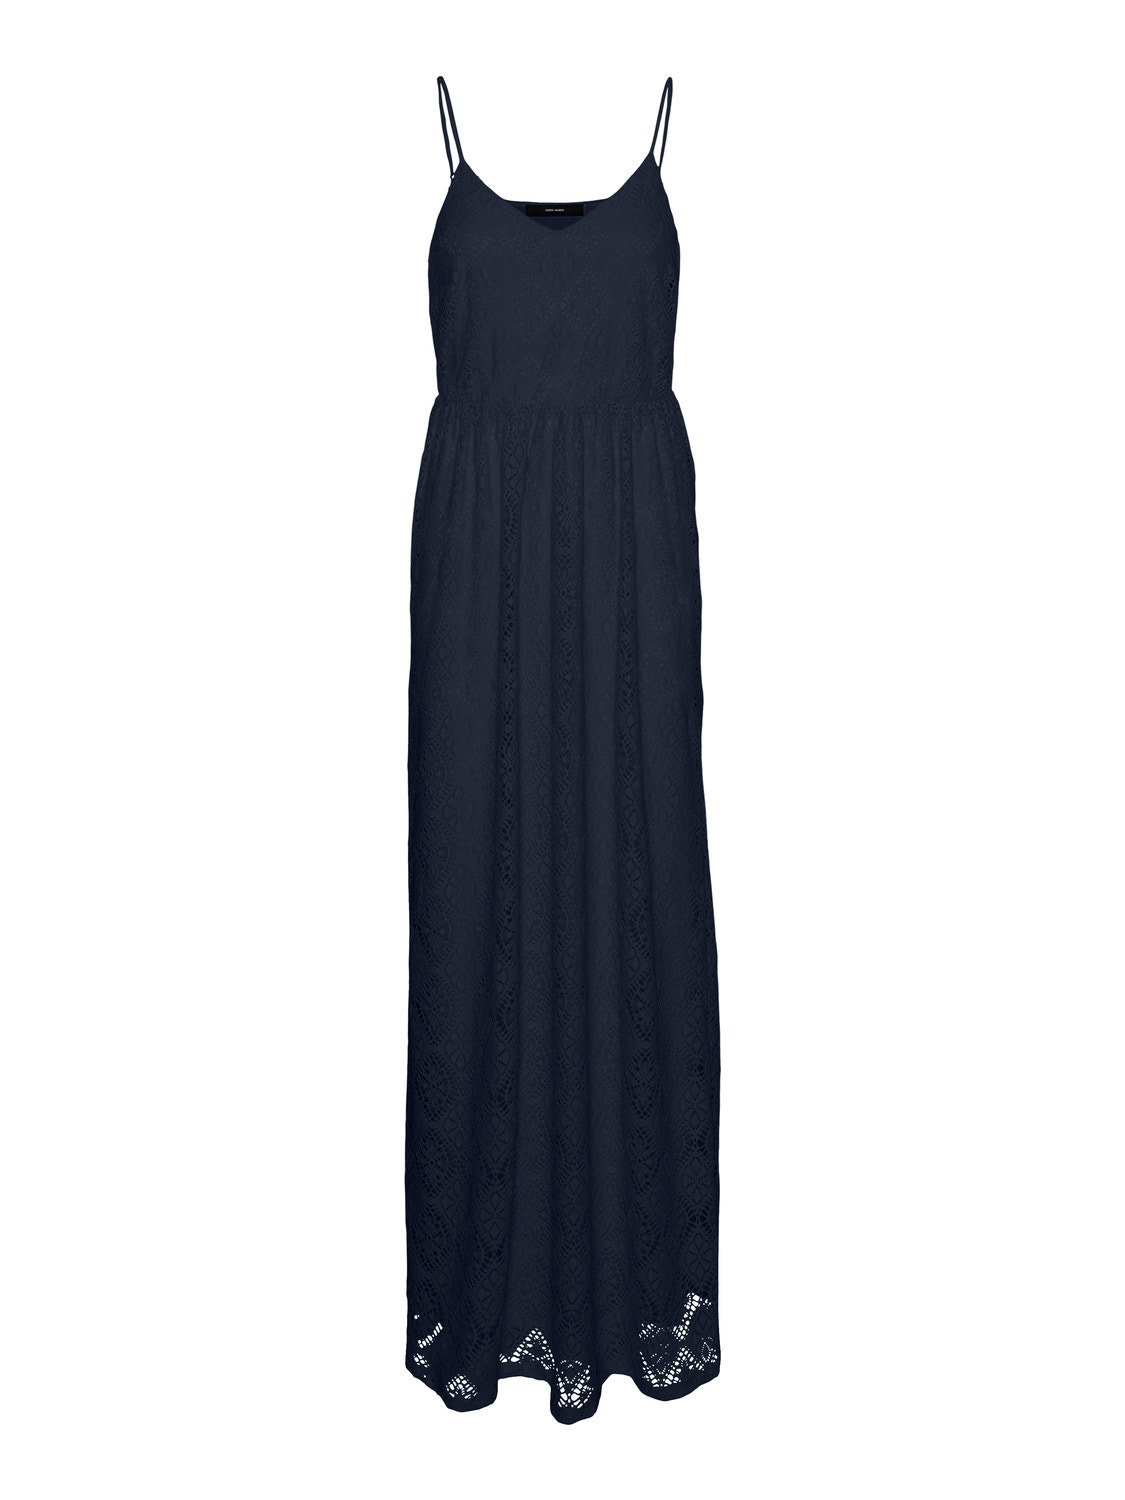 VMMAYA Long dress Moda® with Vero 40% discount! 